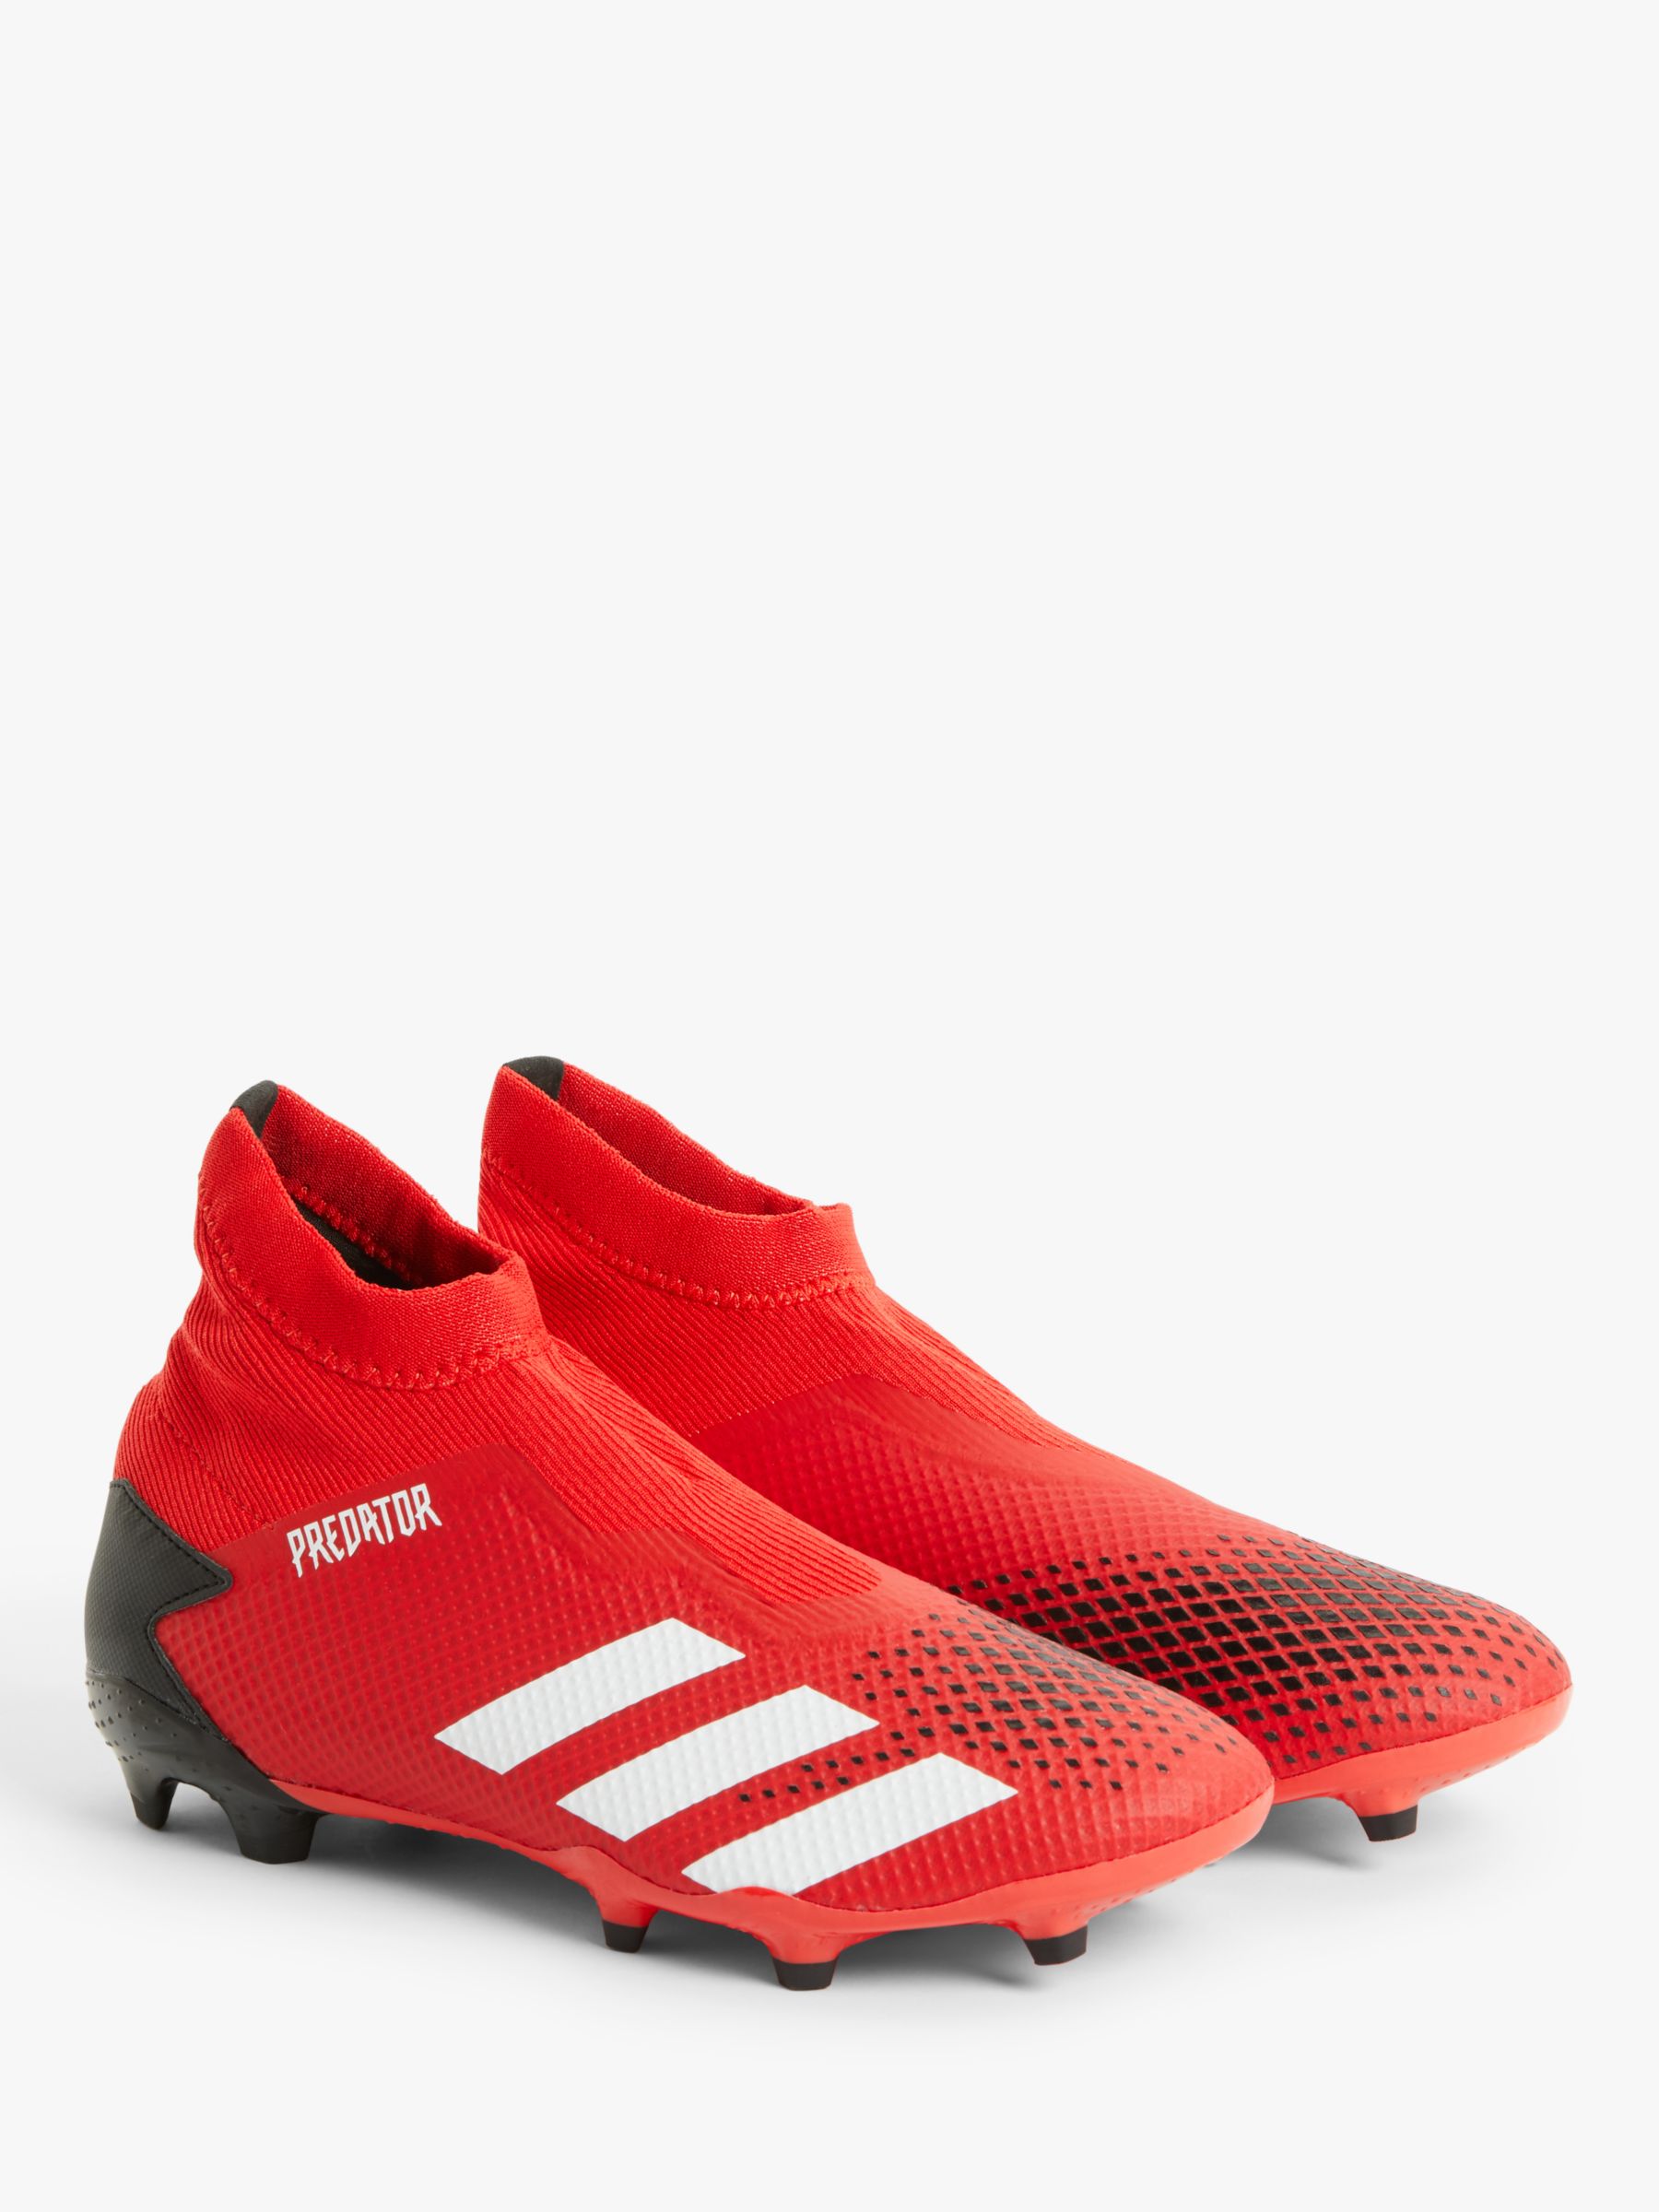 adidas predator football boots size 7